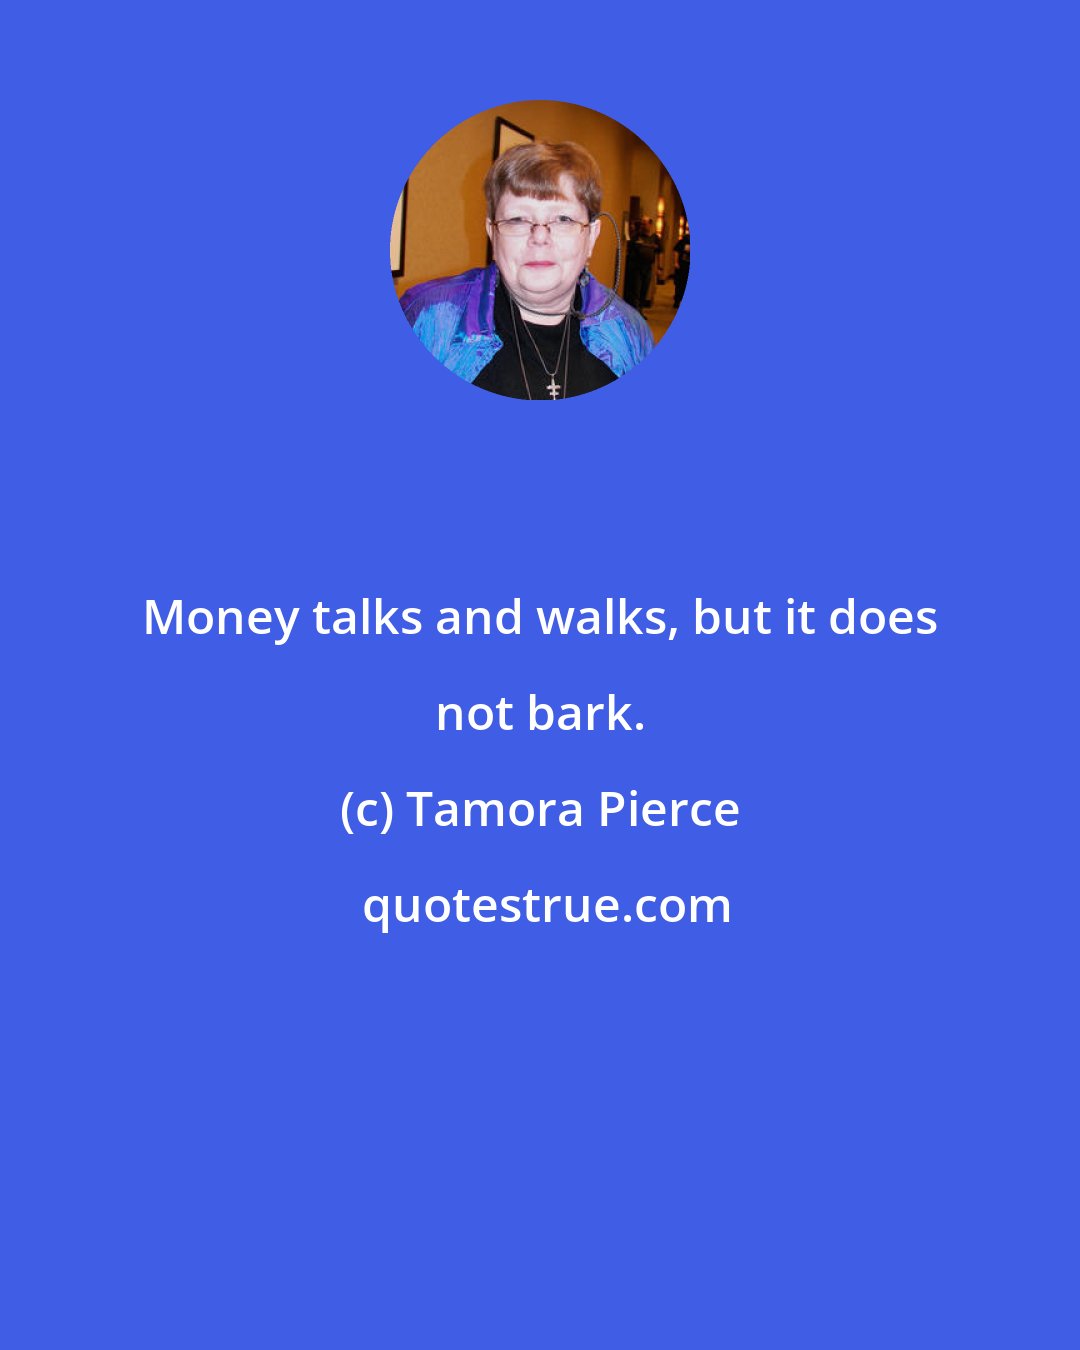 Tamora Pierce: Money talks and walks, but it does not bark.